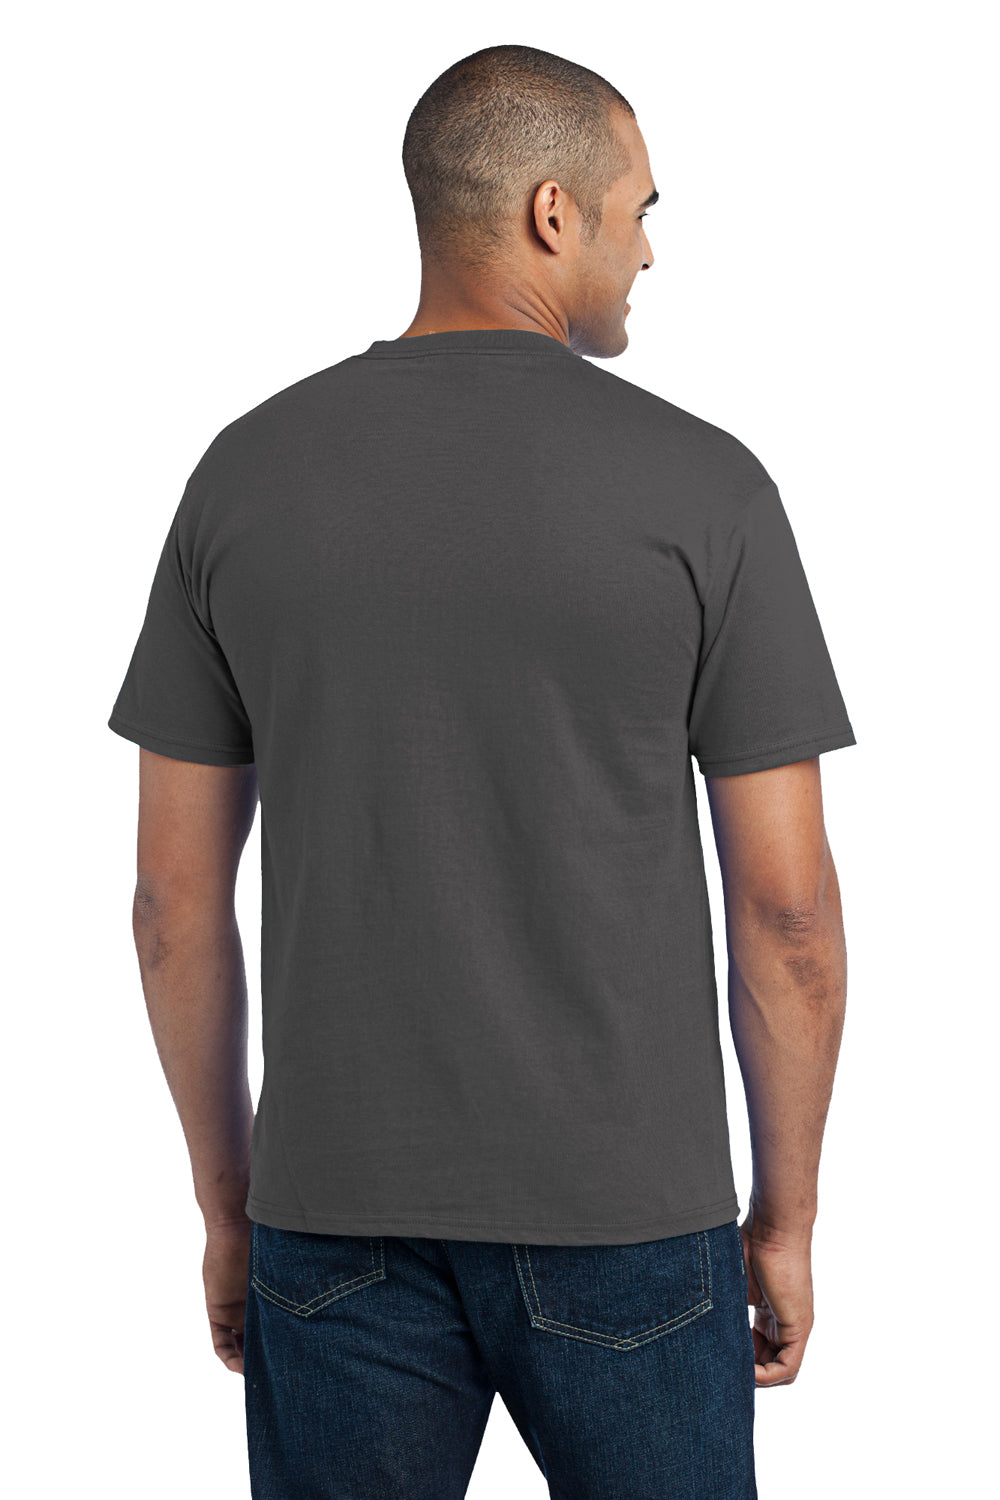 Port & Company PC55P Mens Core Short Sleeve Crewneck T-Shirt w/ Pocket Charcoal Grey Back